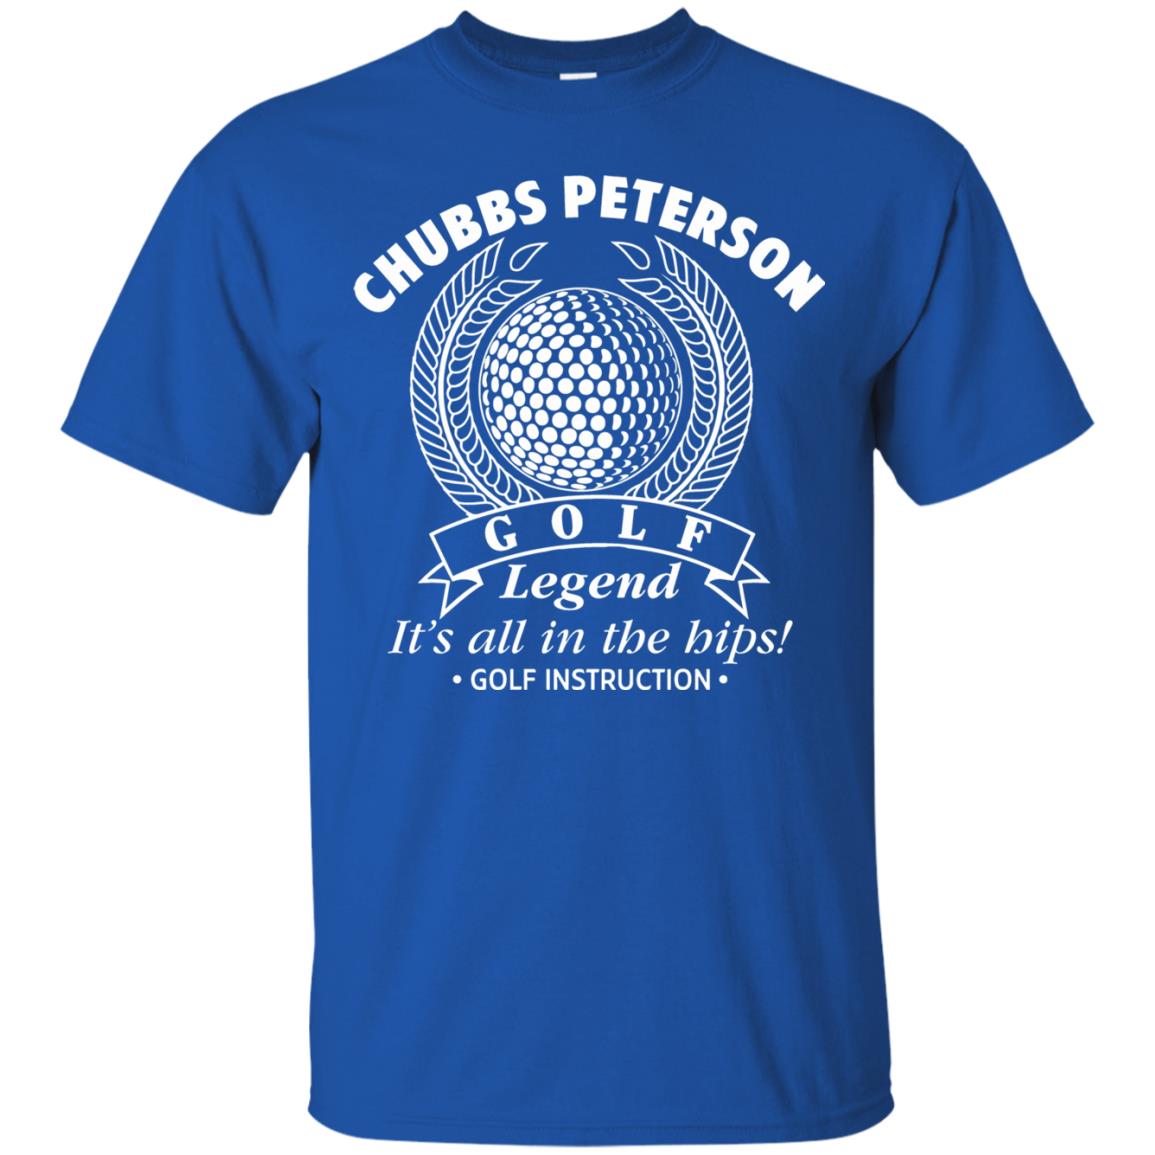 chubbs peterson t shirt - royal blue